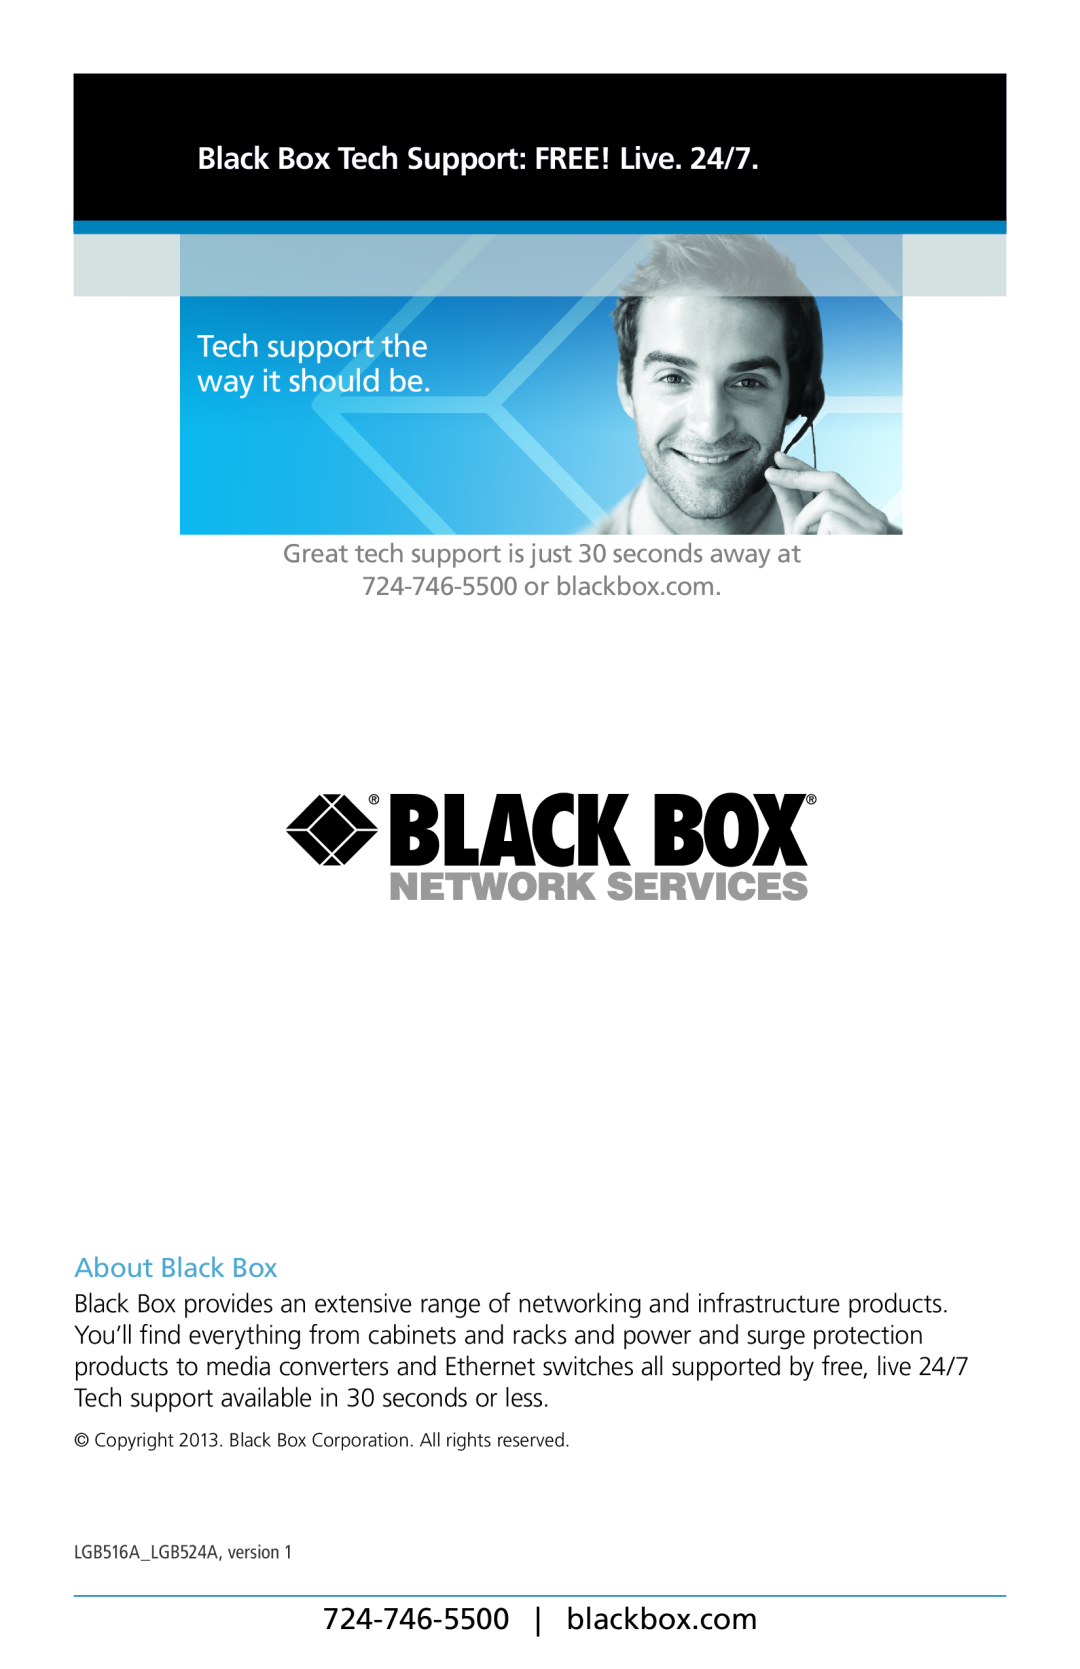 Black Box lgb516a, lgb524a Tech support the way it should be, Black Box Tech Support FREE! Live. 24/7, About Black Box 